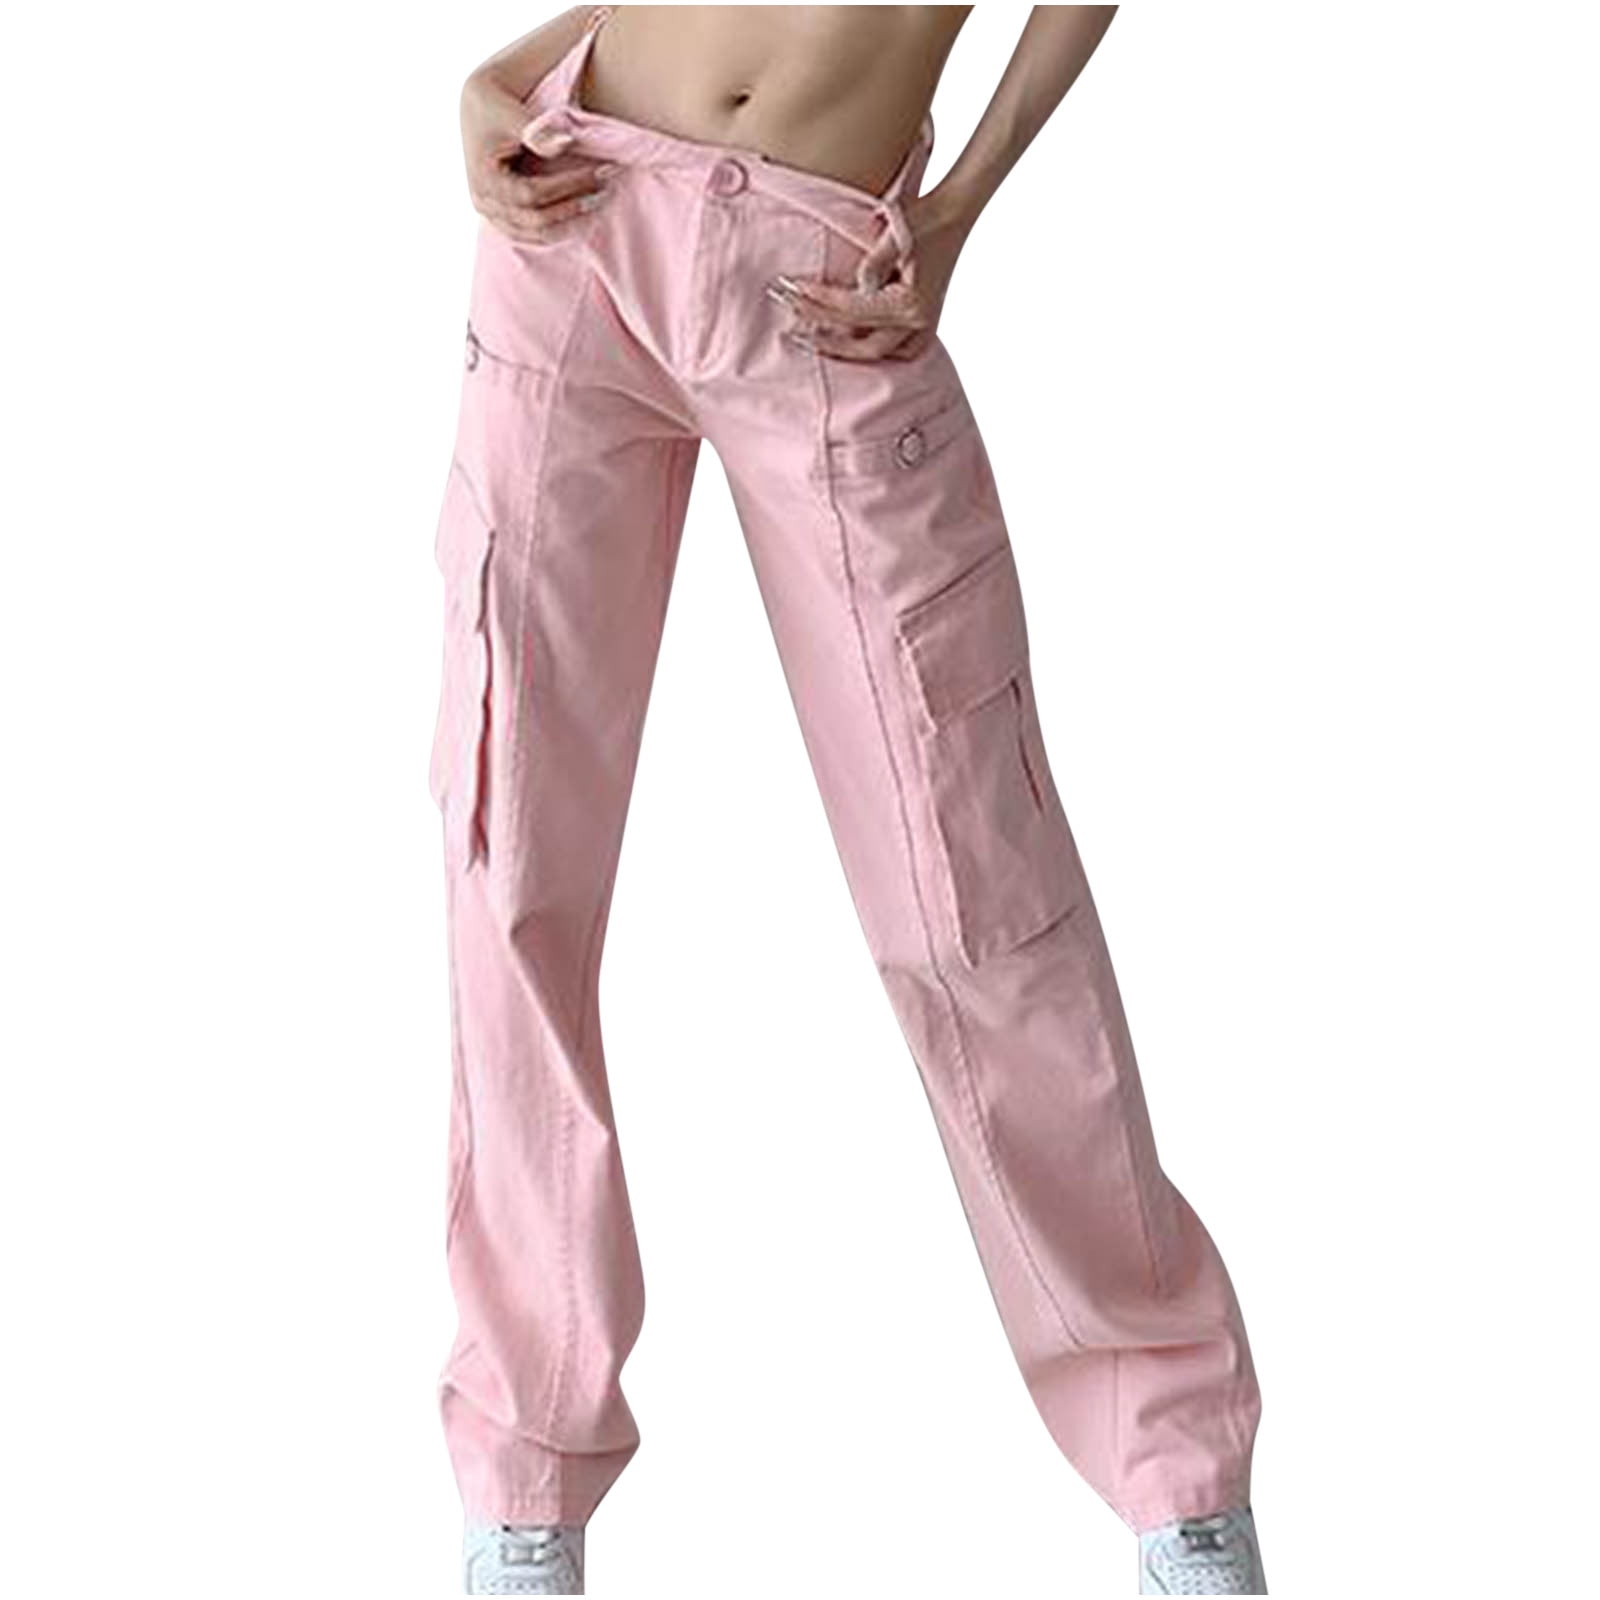 hippie pink color electrician trouser| black trousers | trouser | office  trousers | electrician trousers manufacturer in india | electrician uniform  supplier